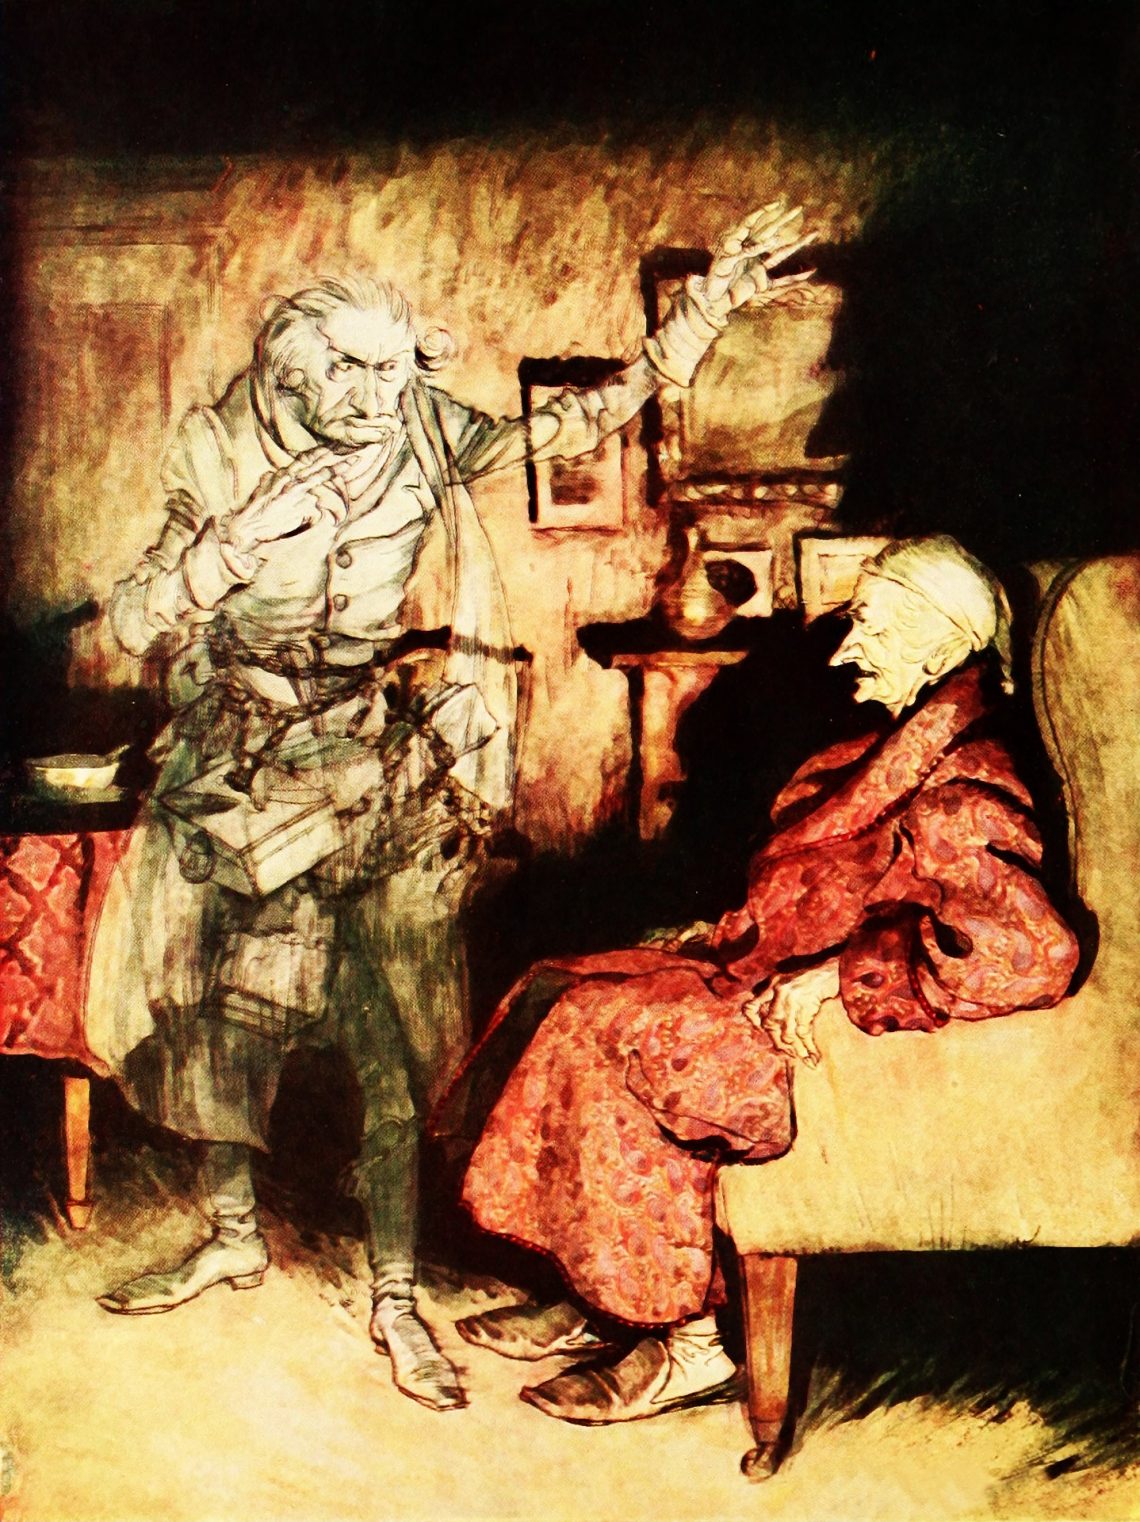 Vintage Scrooge illustration by Arthur Rackham